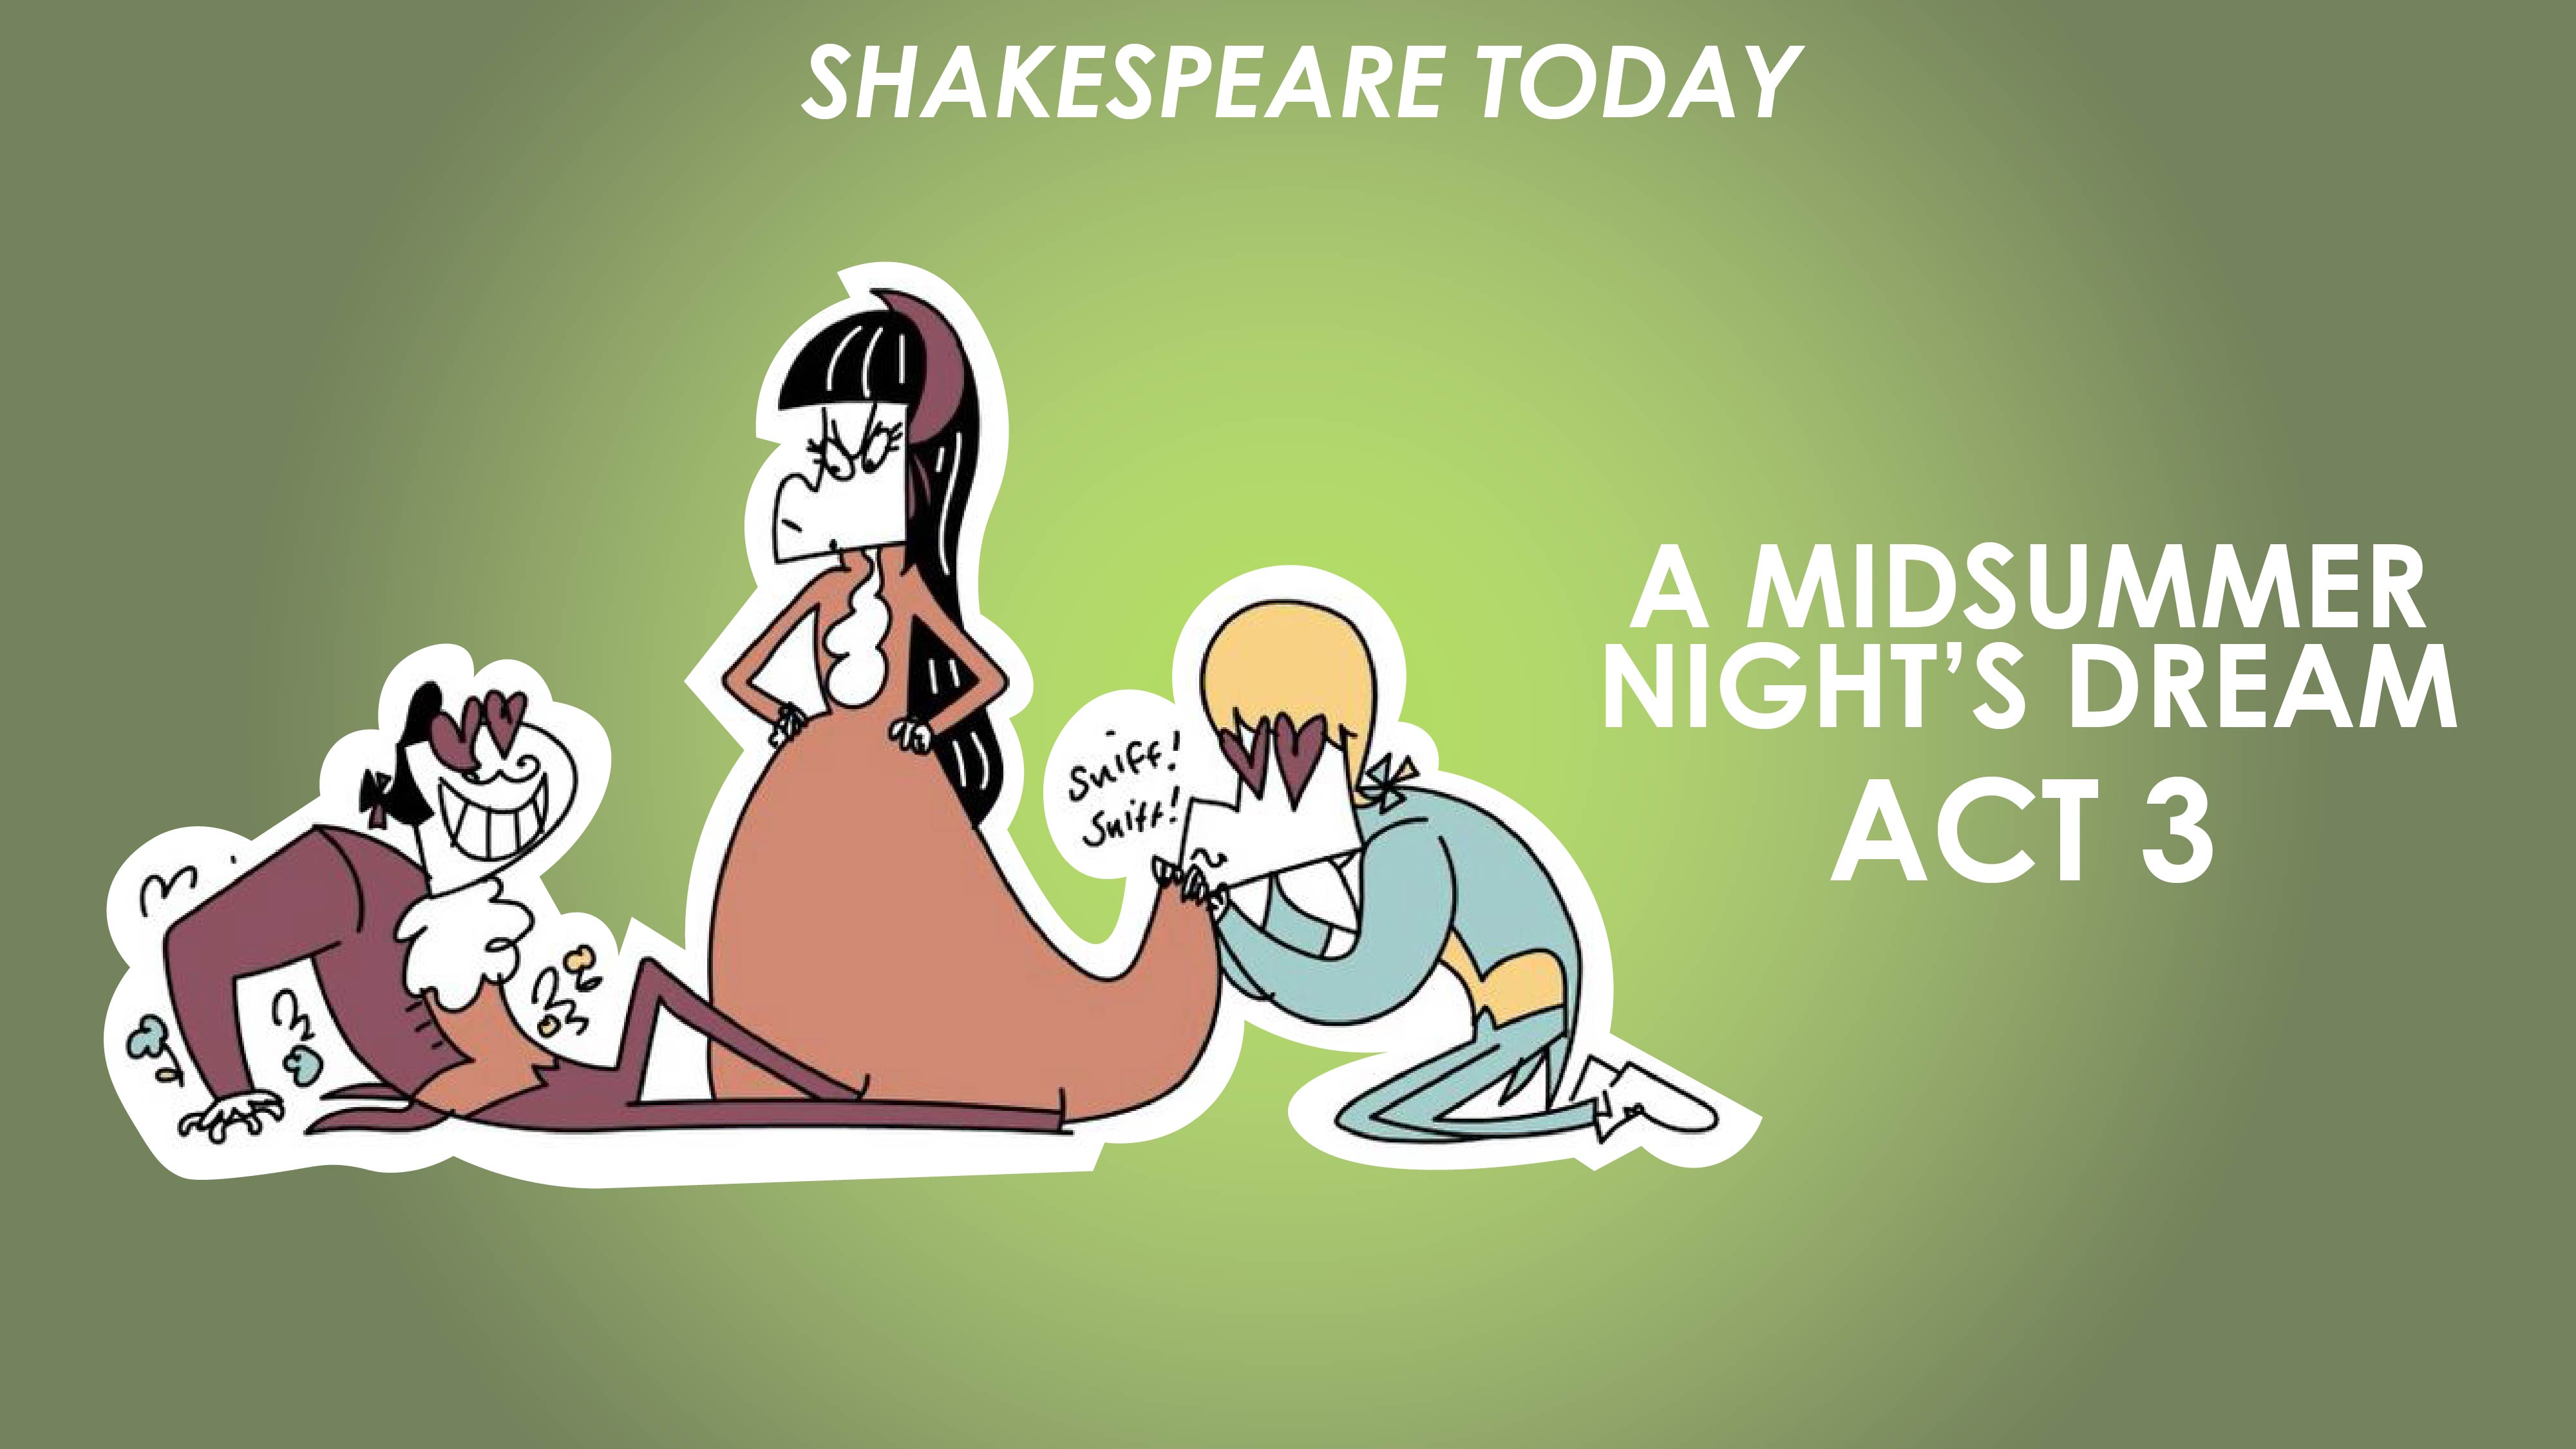 A Midsummer Night's Dream Act 3 Summary - Shakespeare Today Series